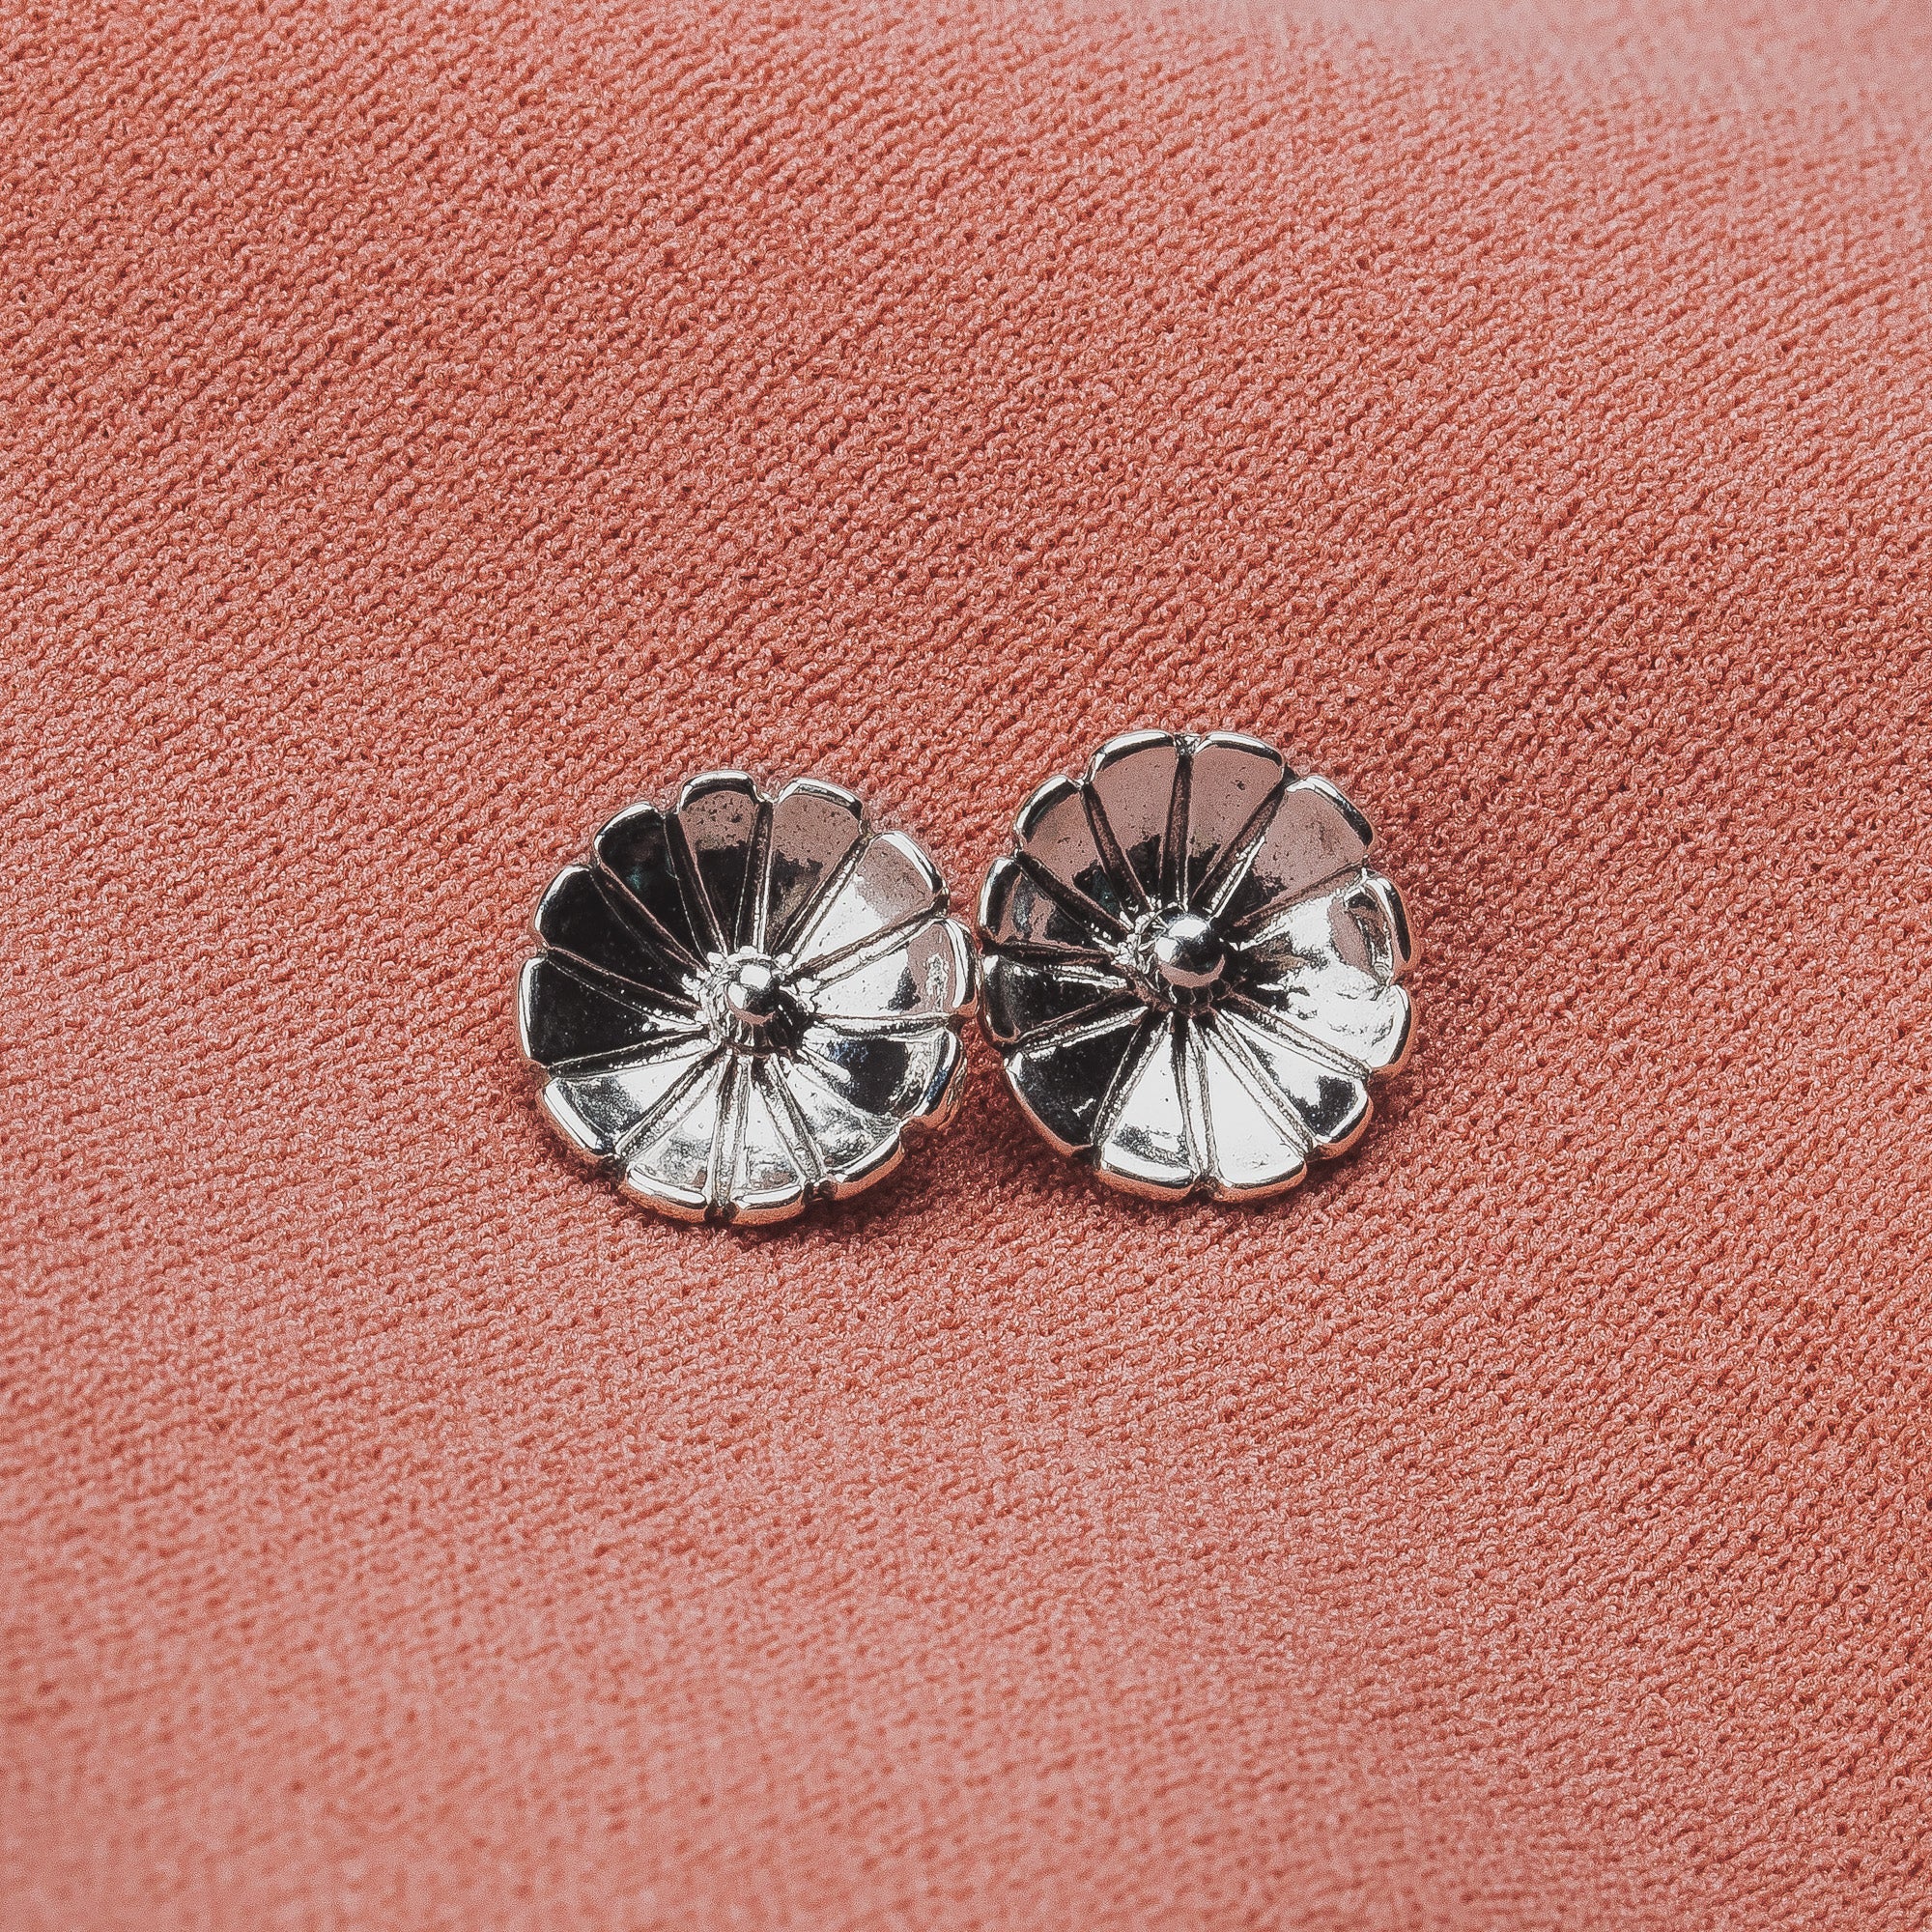 Wildflower Stud Earrings - Melanie Golden Jewelry - earrings, flora, post earrings, silver, stud, stud earrings